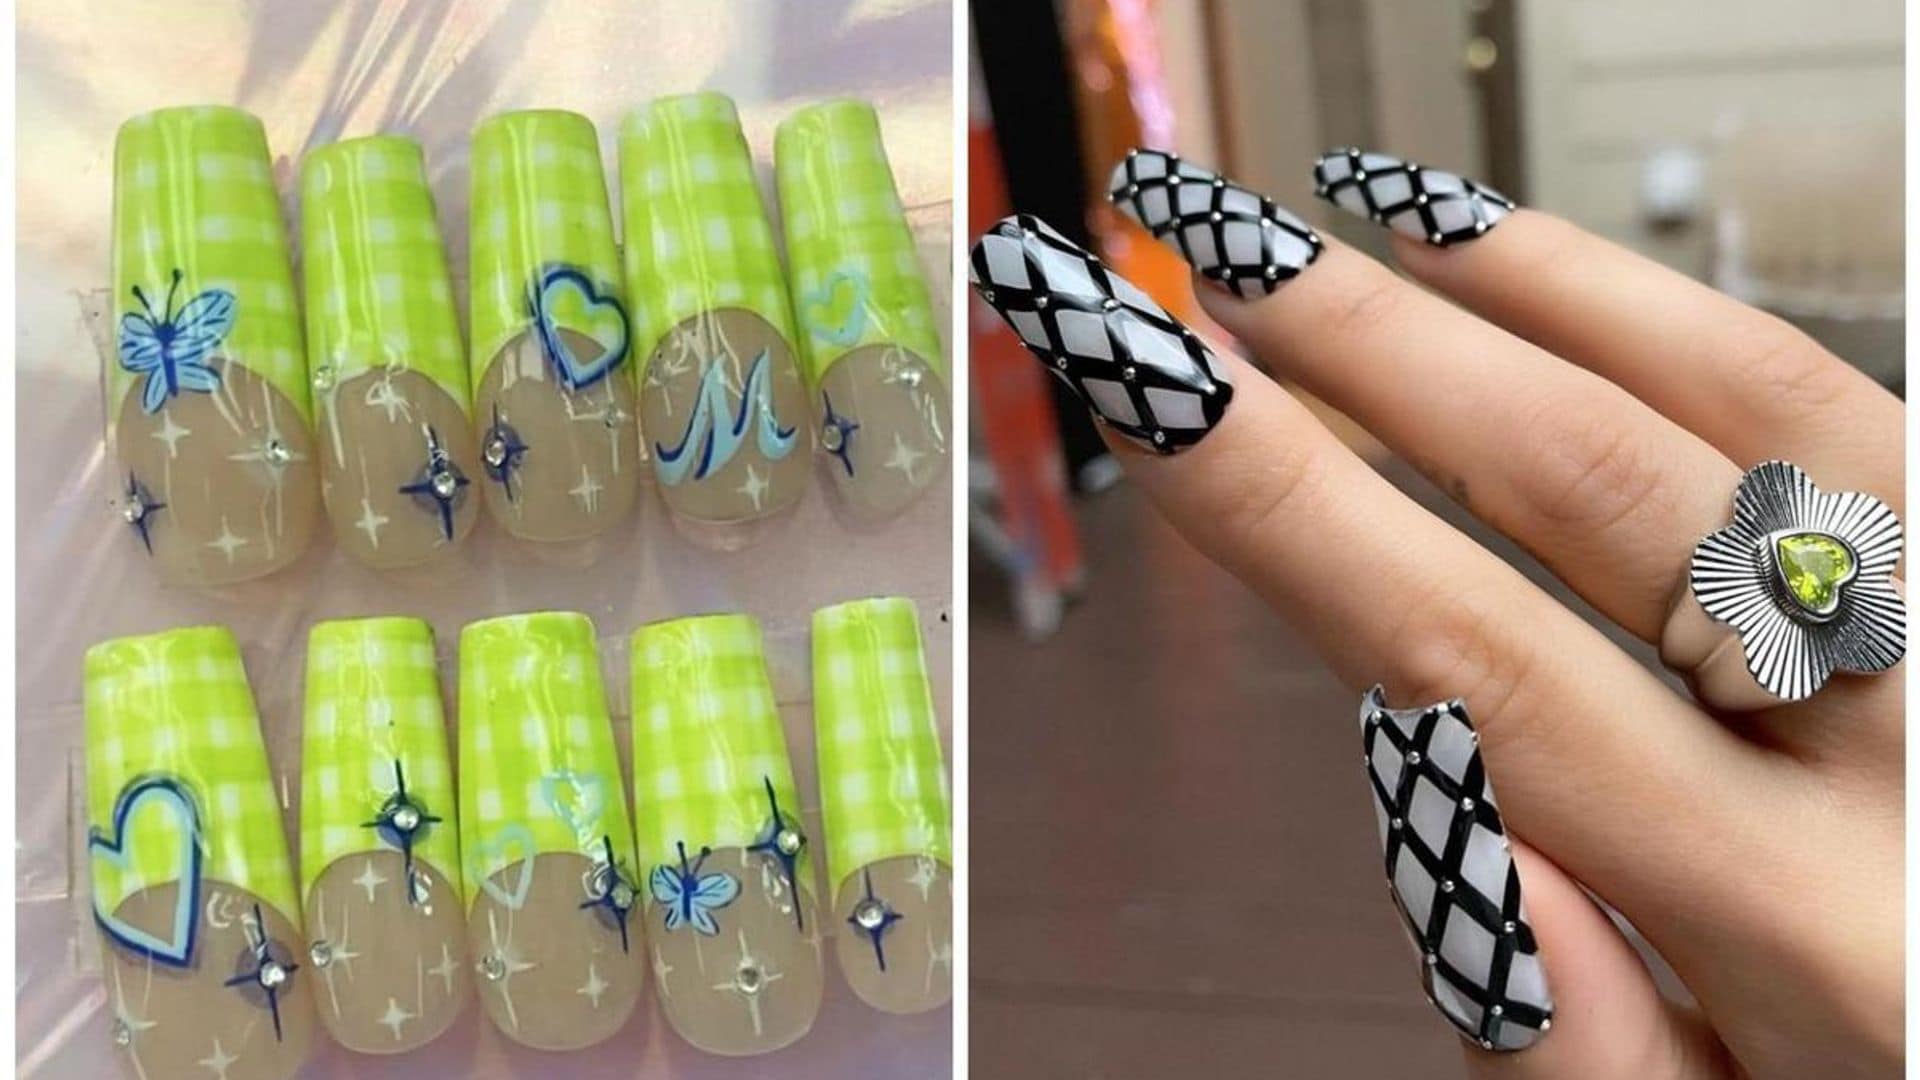 Natalie Minerva is the artist creating Euphoria’s viral nail-art designs